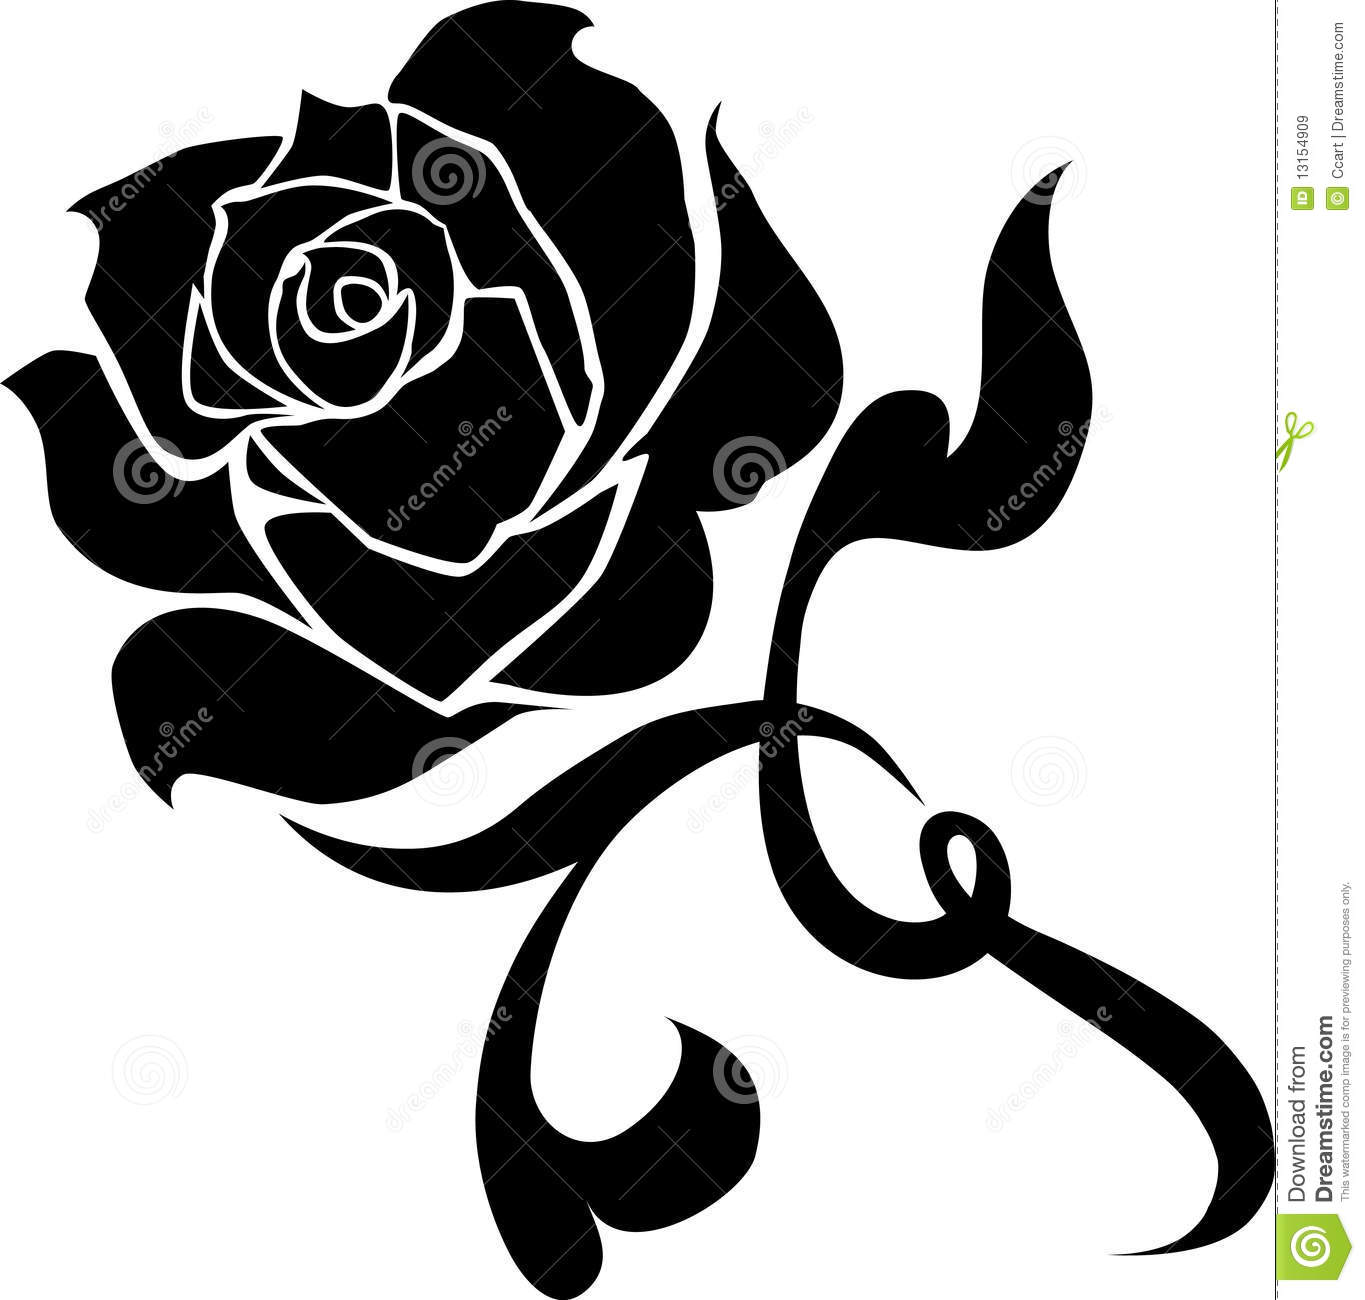 rose clip art vector - photo #47